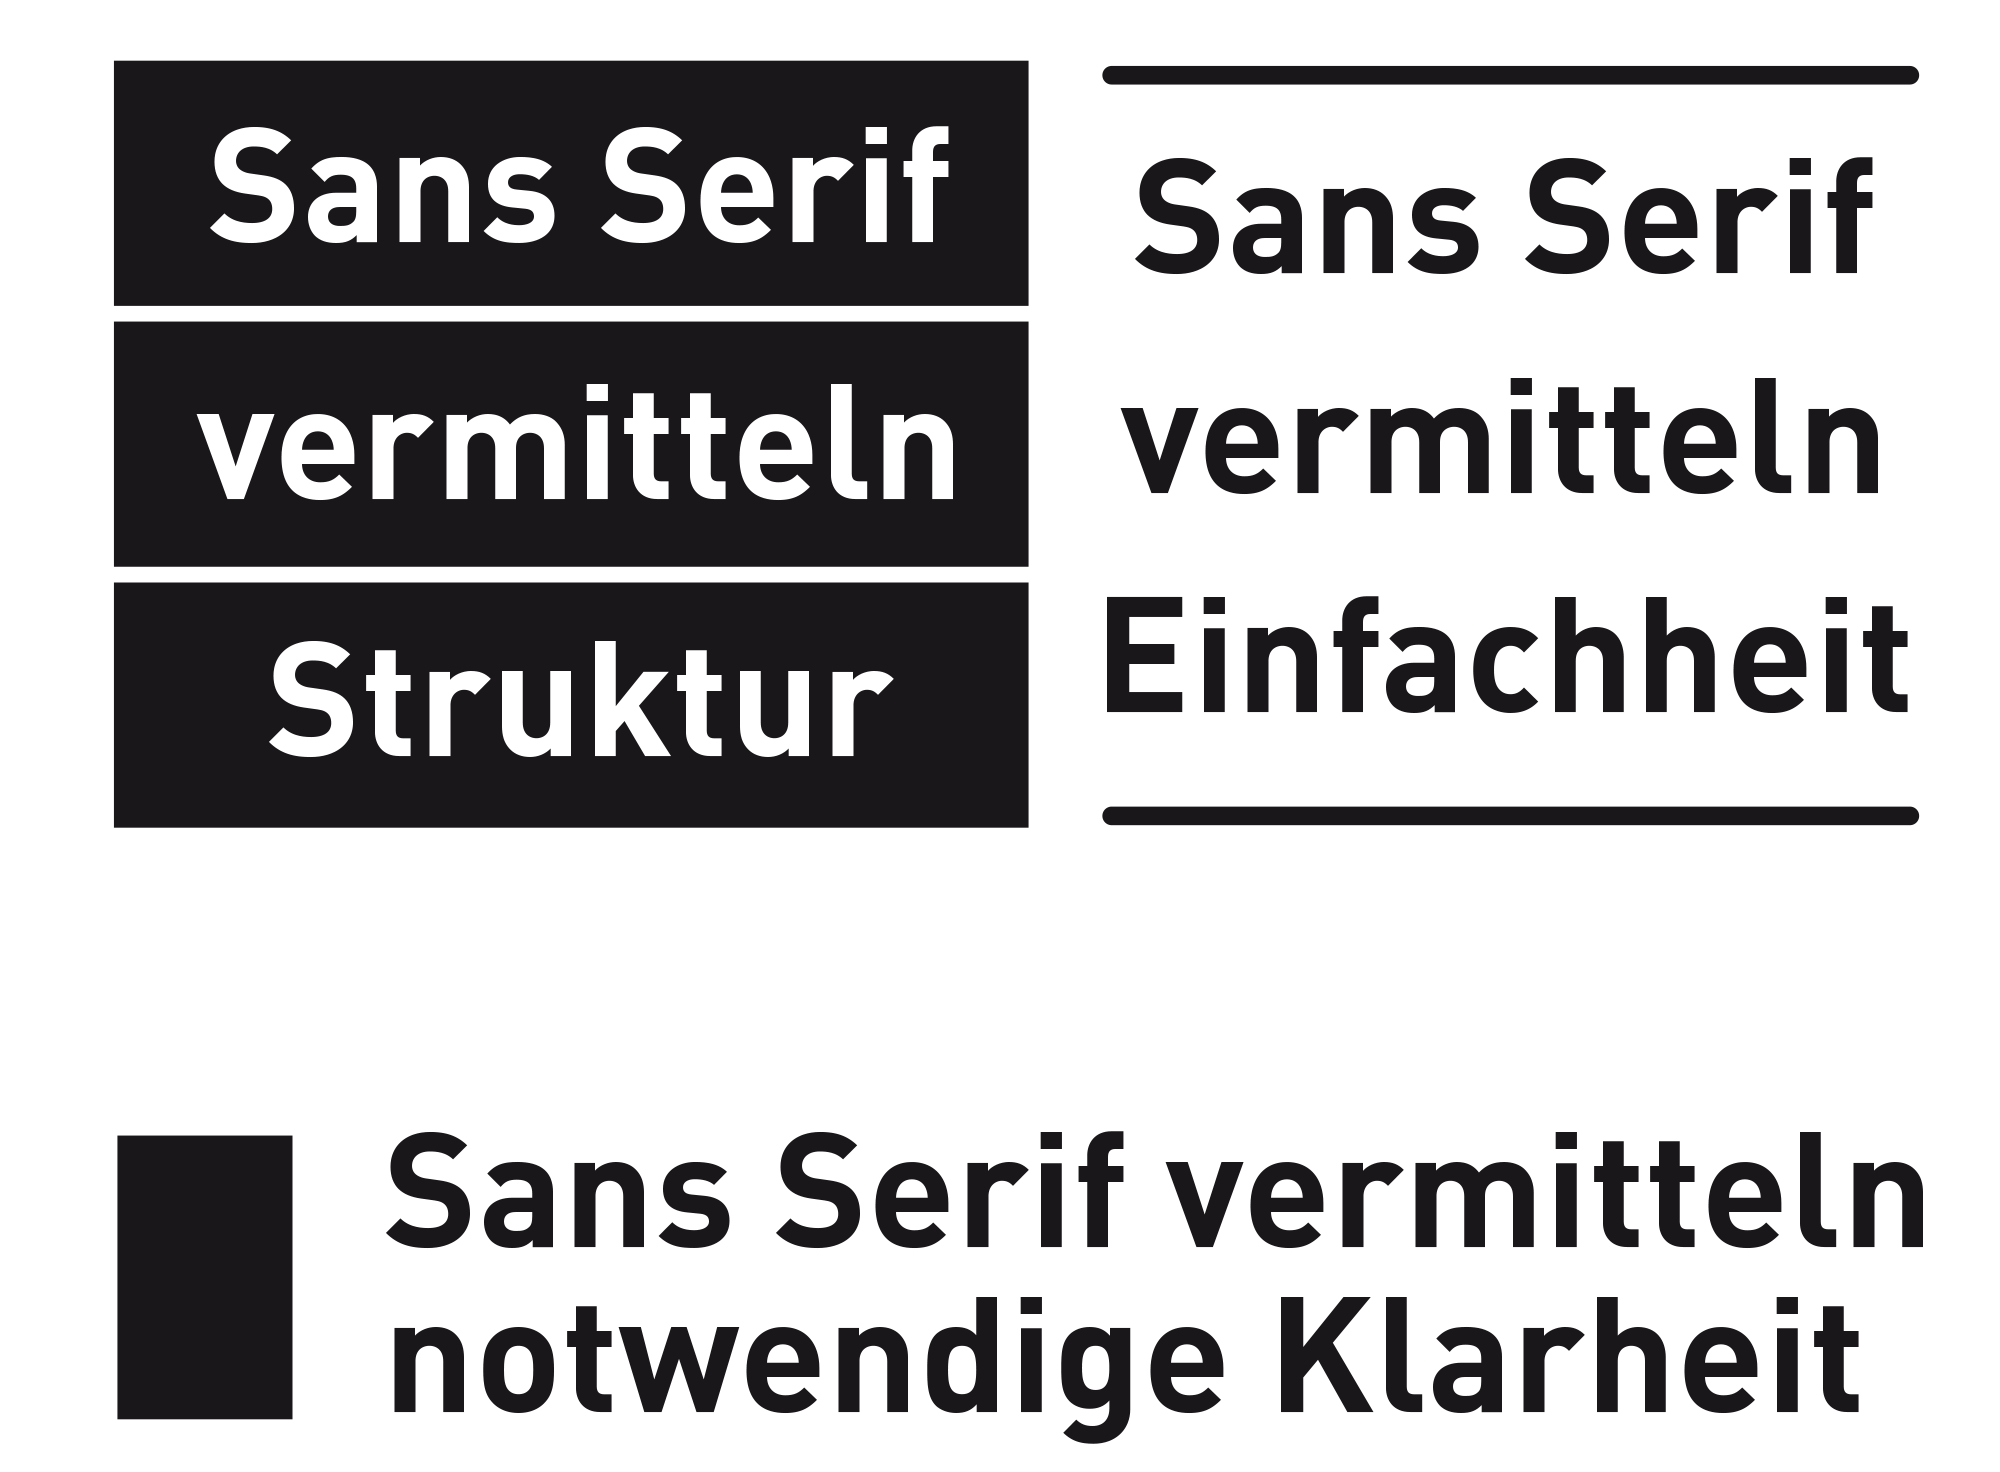 Sans Serif-Schriften vermitteln Klarheit